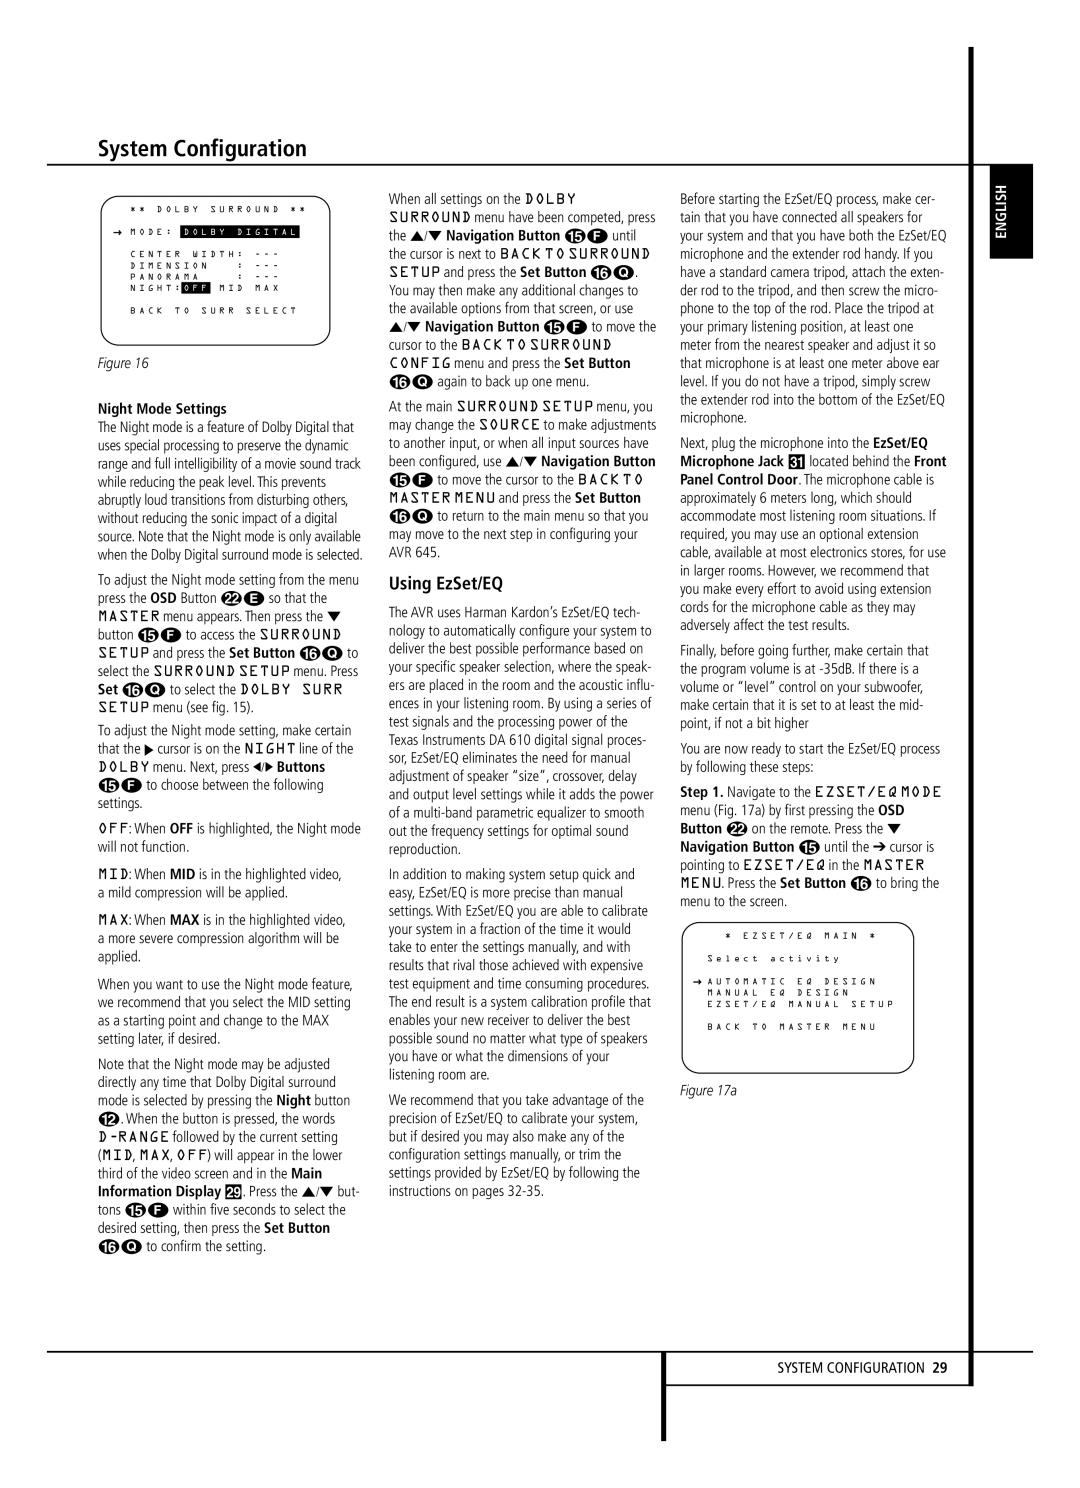 Harman-Kardon AVR 645 owner manual Using EzSet/EQ, Night Mode Settings, System Configuration, Figure, English 